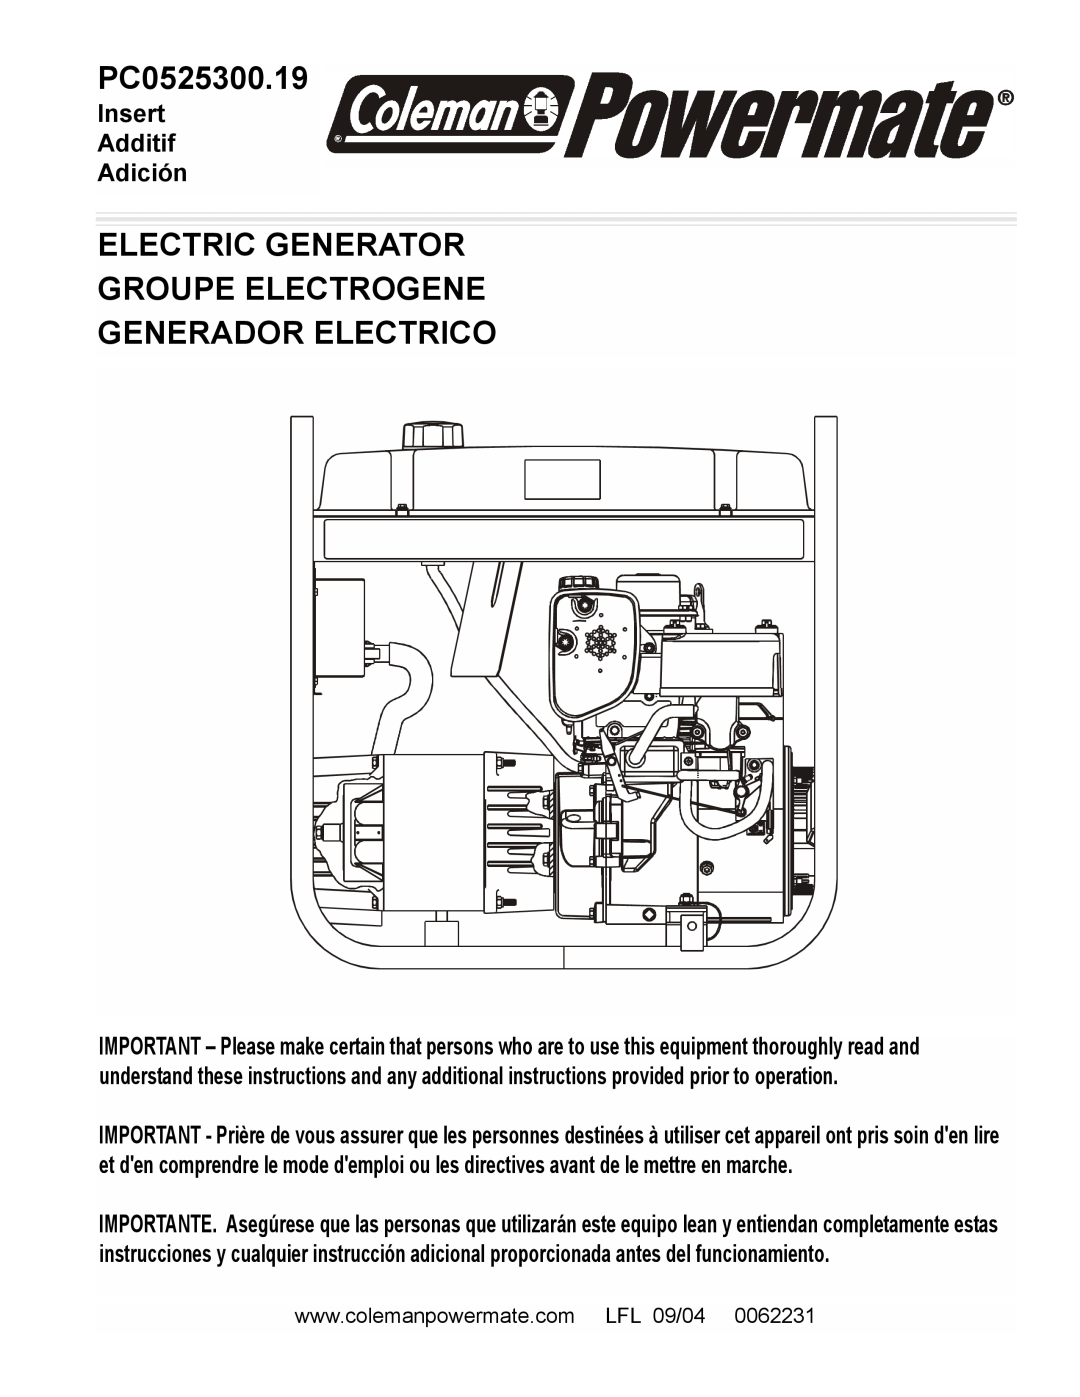 Powermate PC0525300.19 manual Electric Generator Groupe Electrogene, Generador Electrico, Insert Additif Adición 